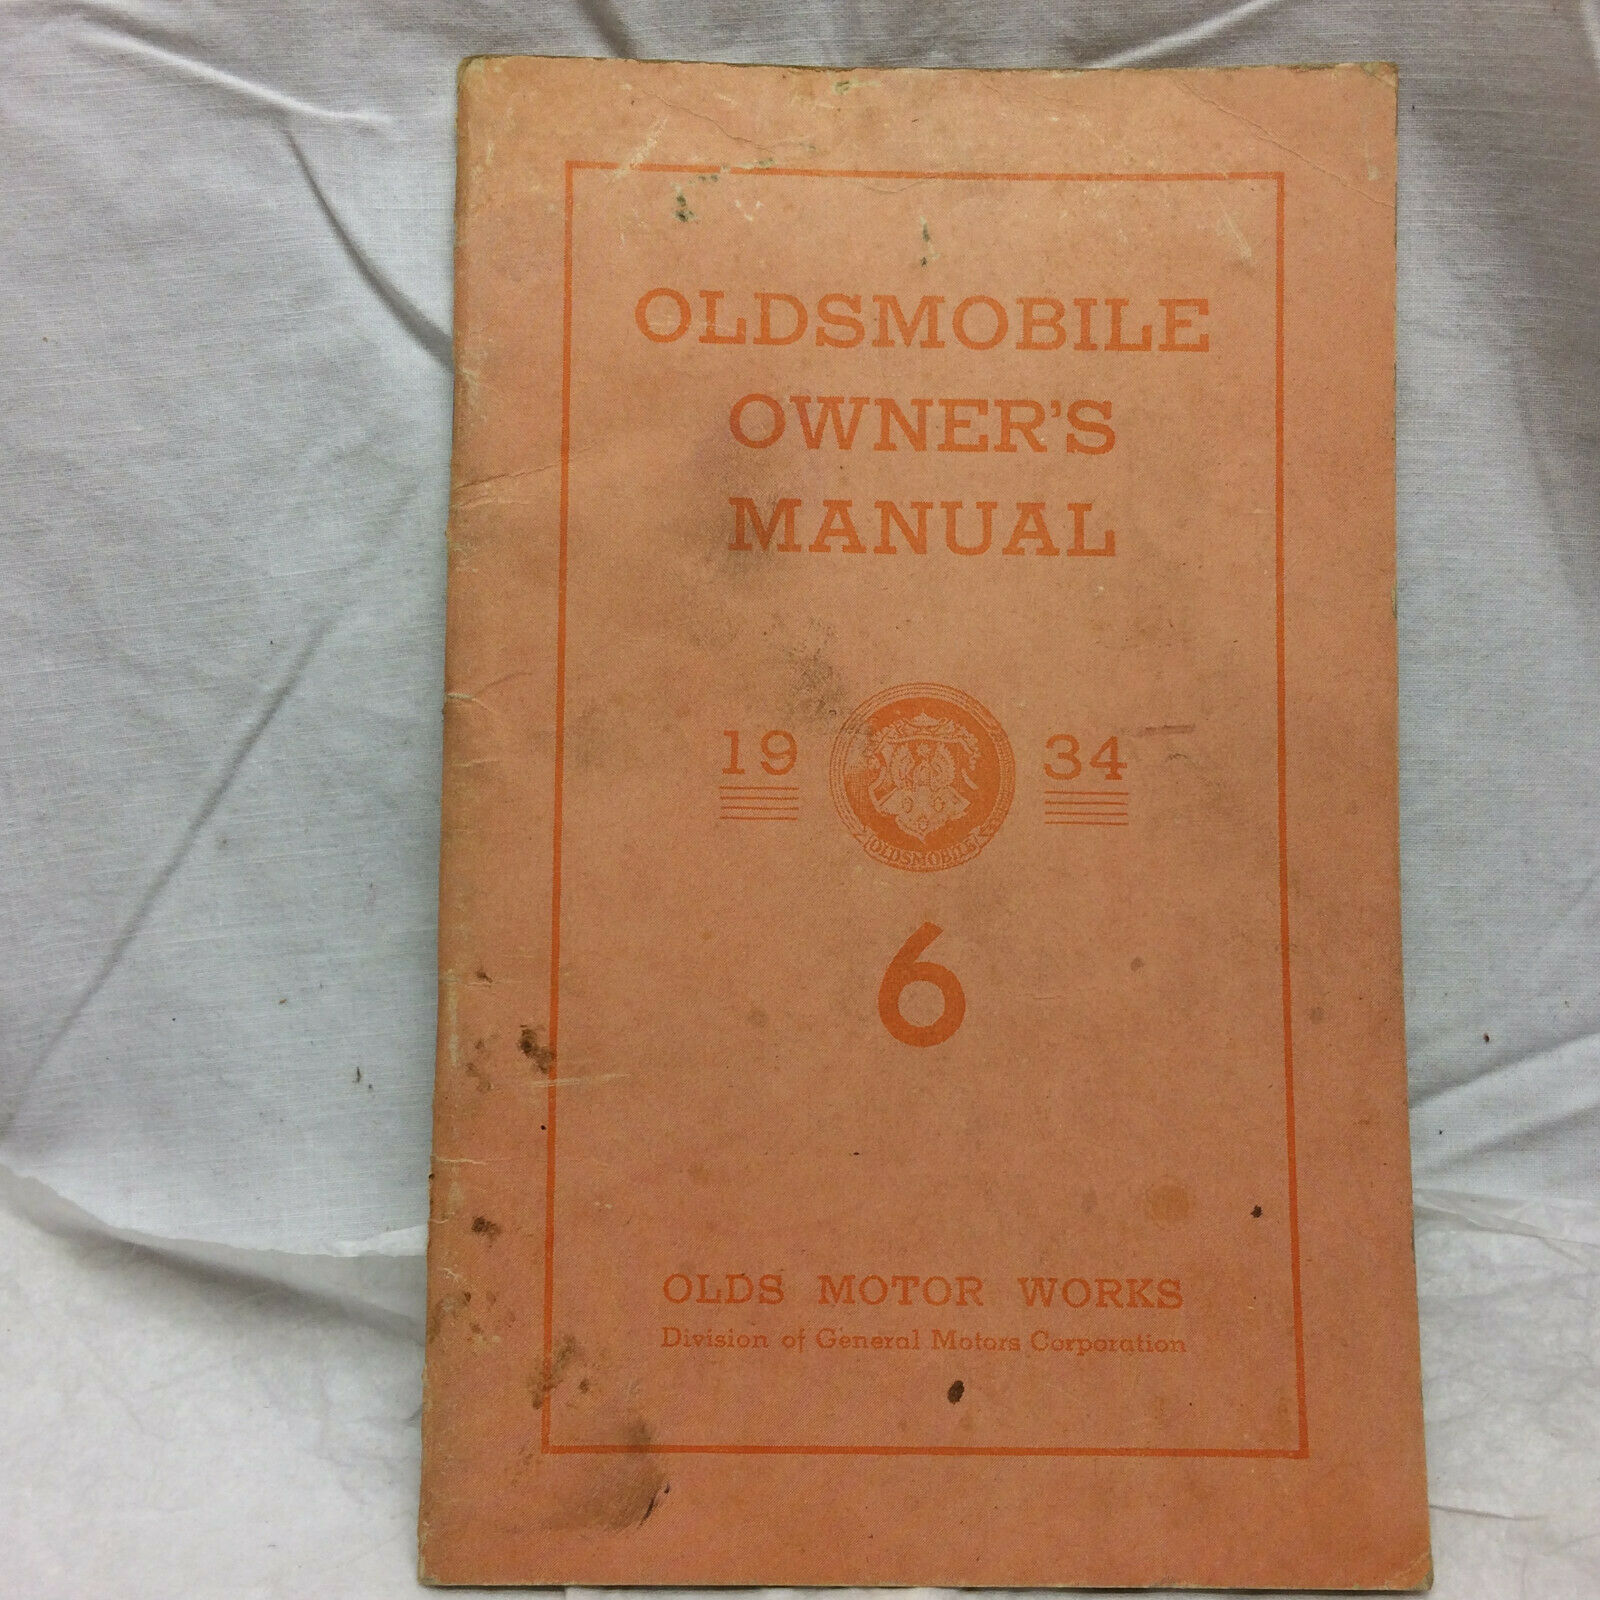 Vintage Oldsmobile Owner's Manual 1934